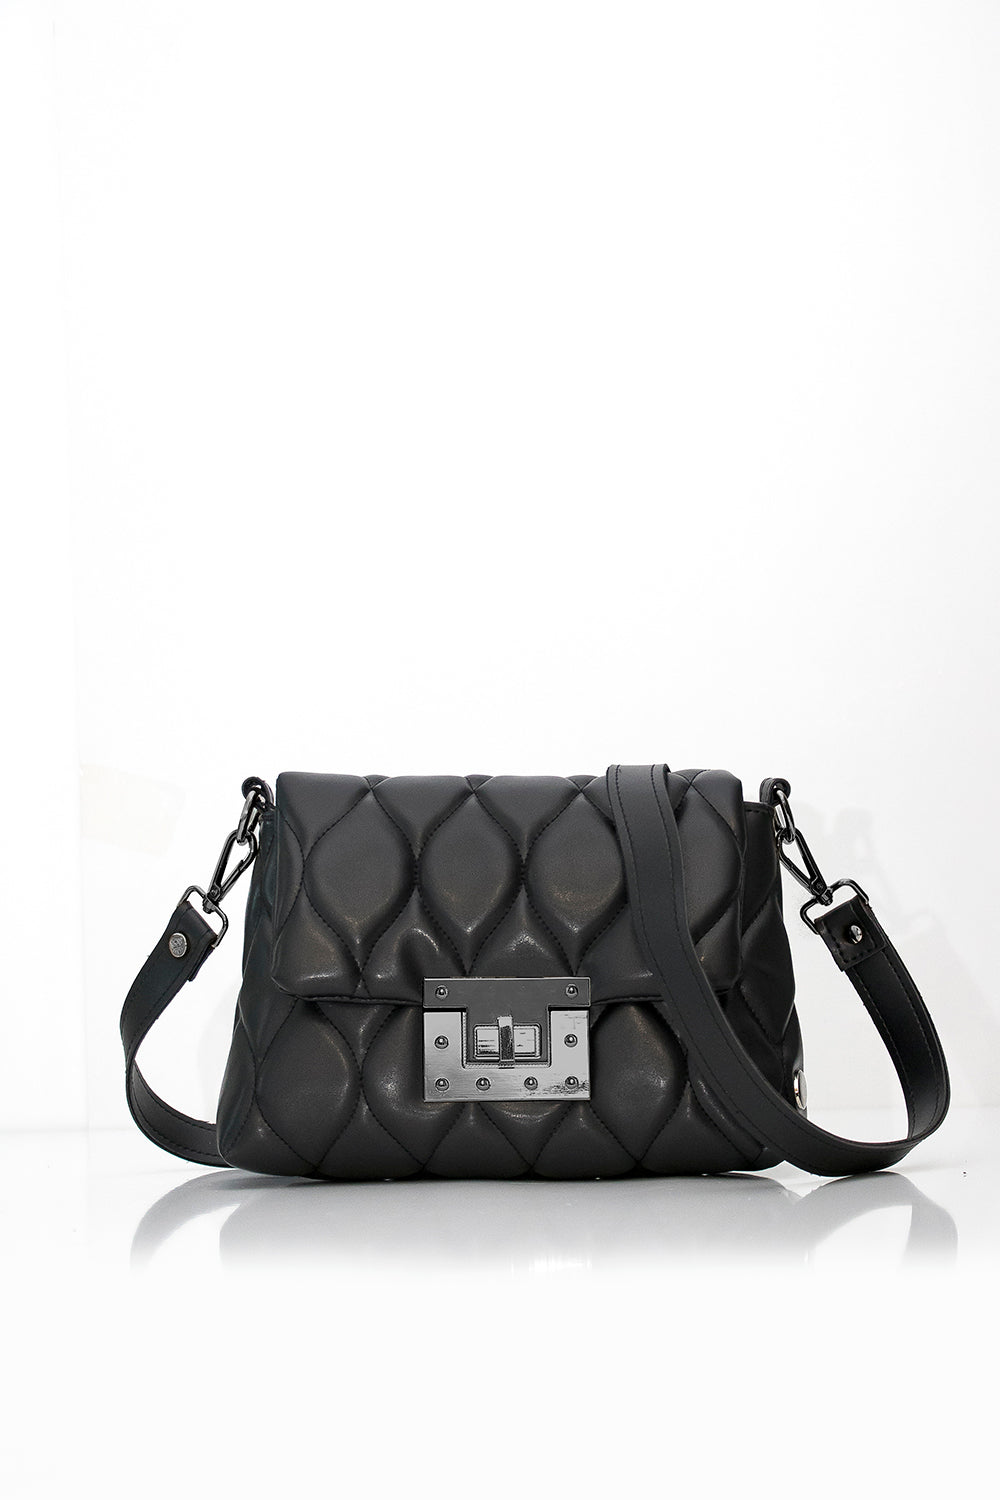 Handbags for women - BAG - APRIL - ROYAL BLACK BLACK